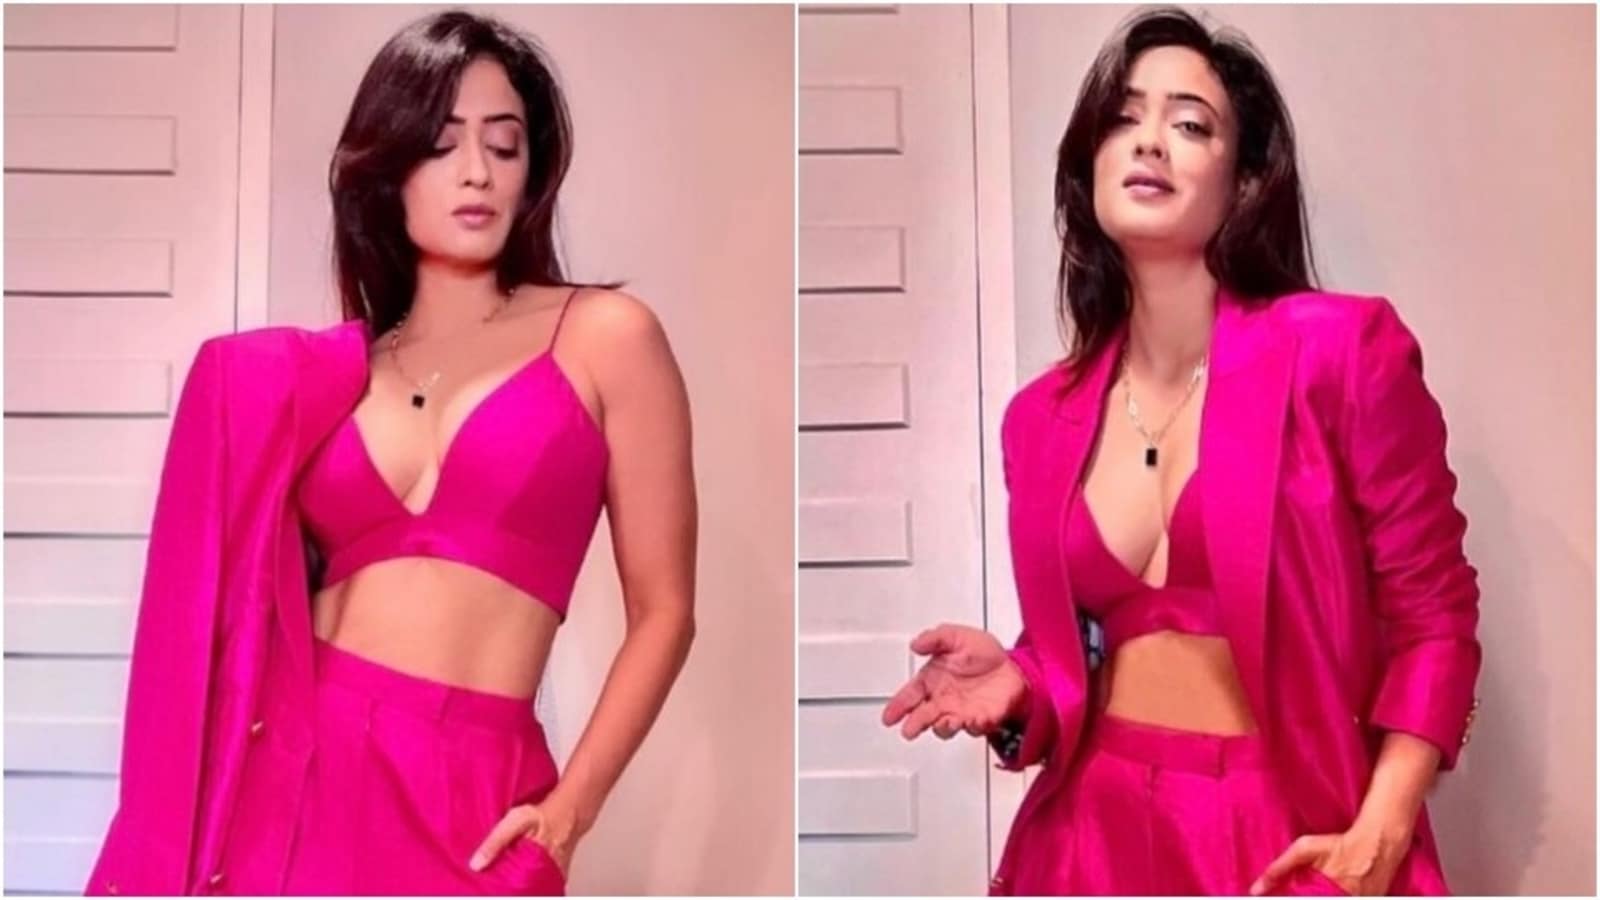 Sweta Tiwari Nude Pic - Pics: Shweta Tiwari in hot pink bralette and pants channels her inner boss  lady | Fashion Trends - Hindustan Times